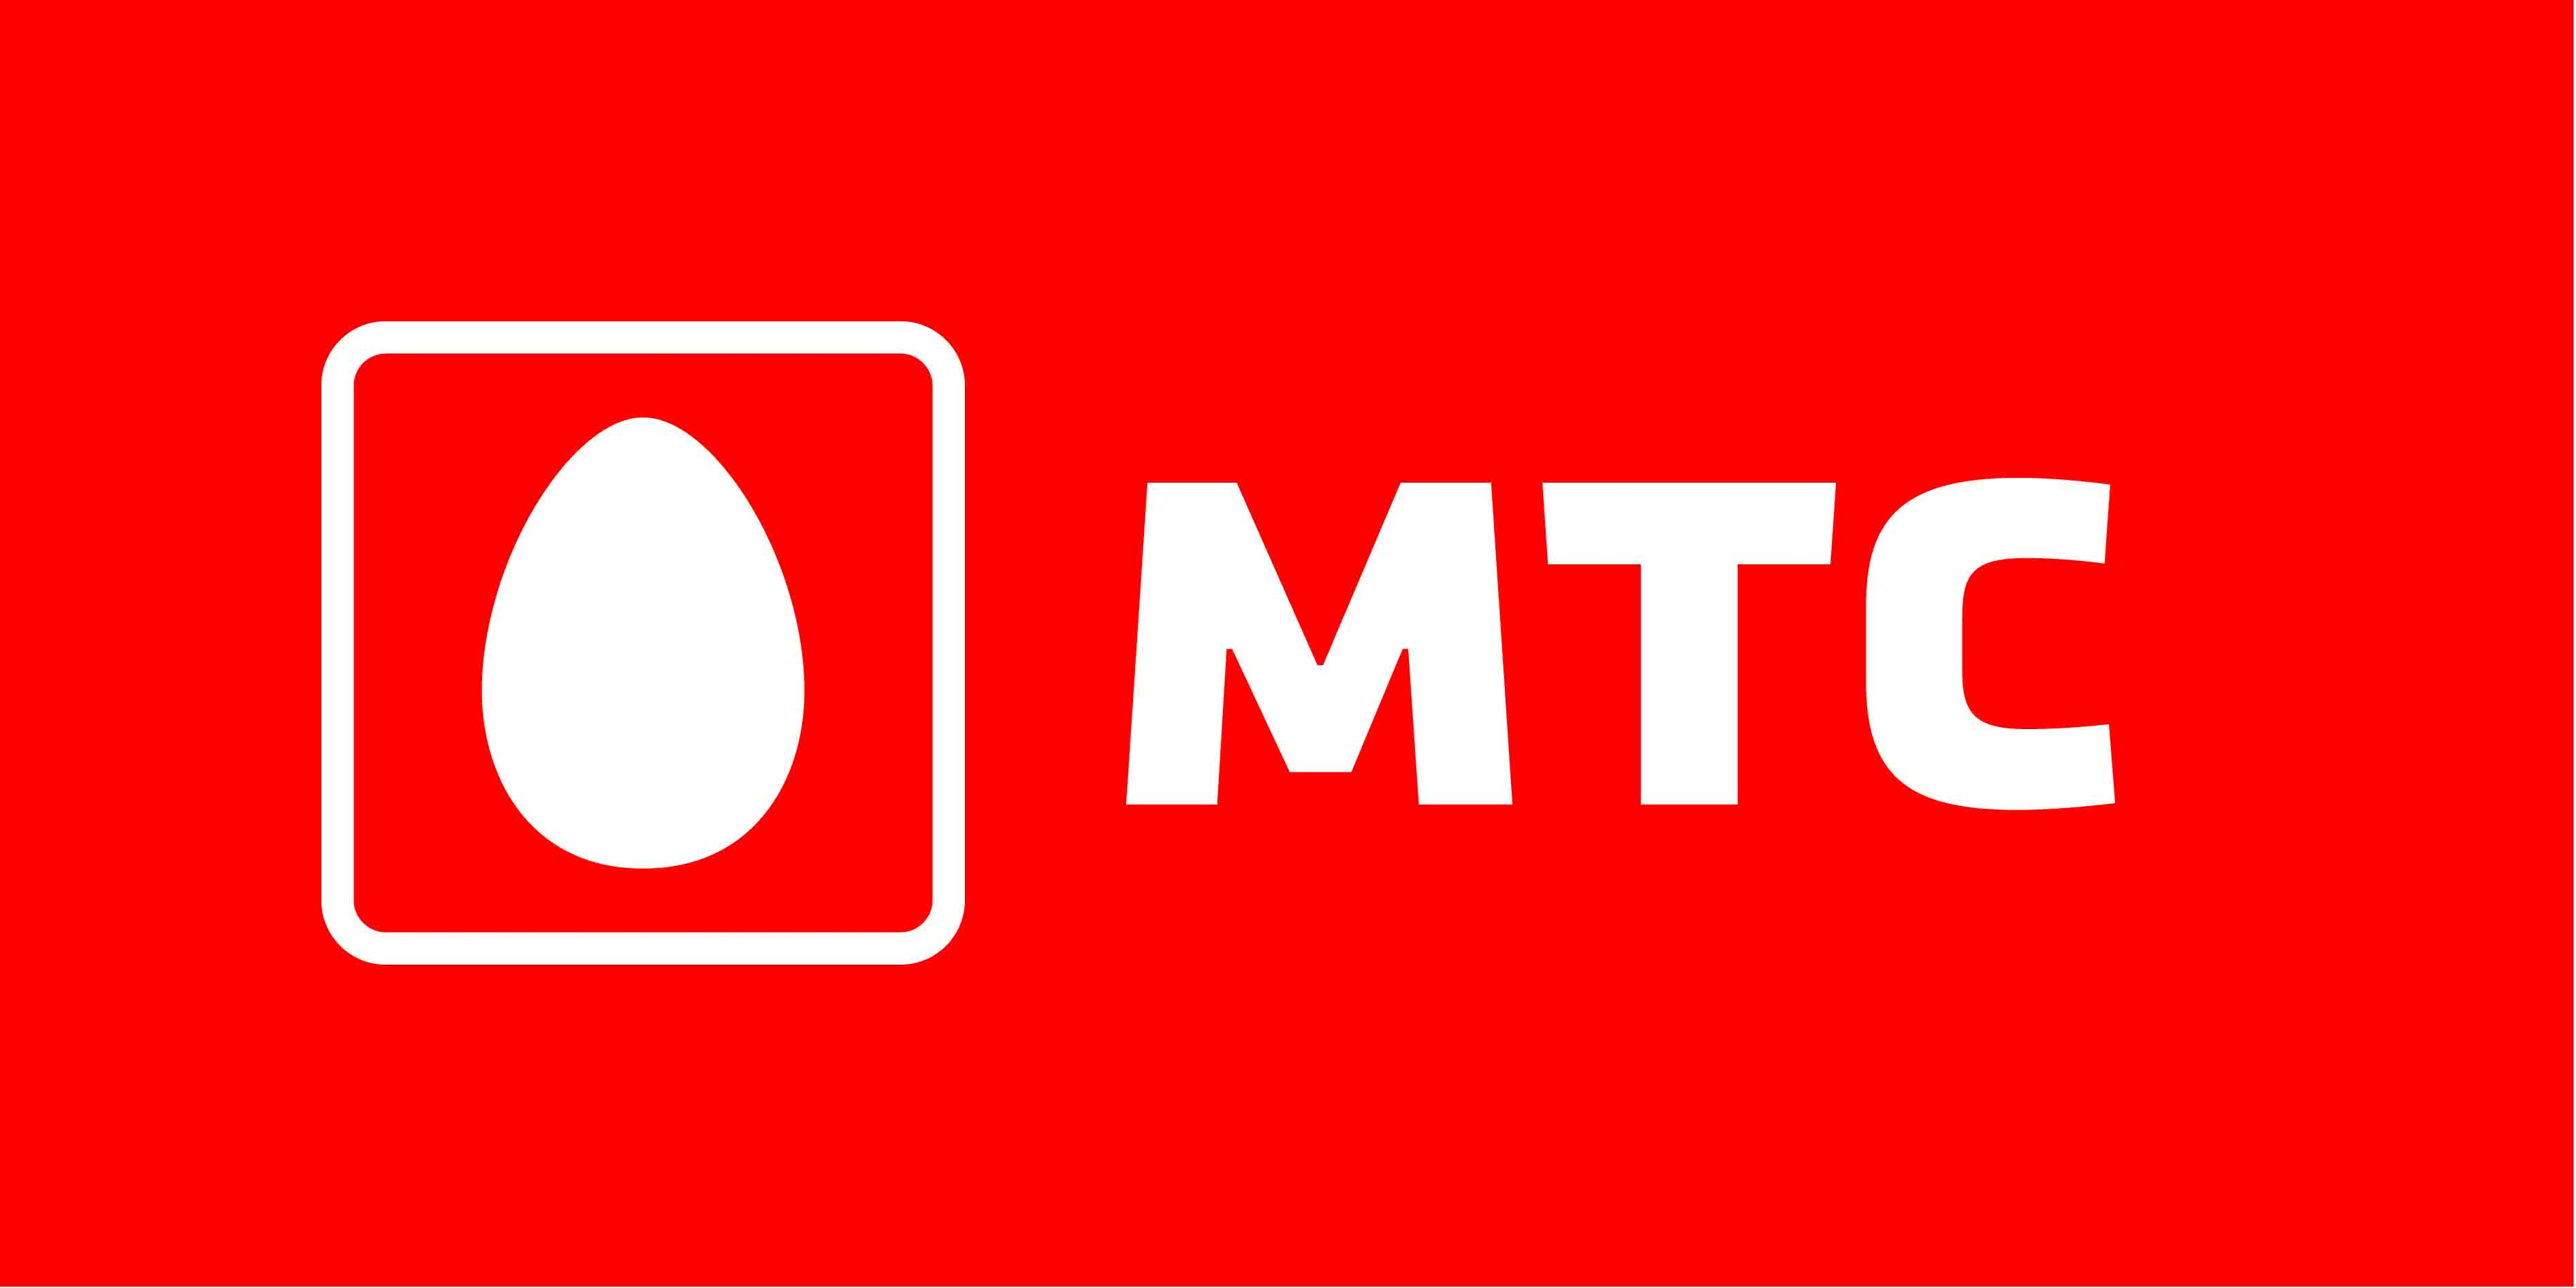 Mts. МТС логотип. МТЗ логотип. МТ логотип. МЛС логотип.